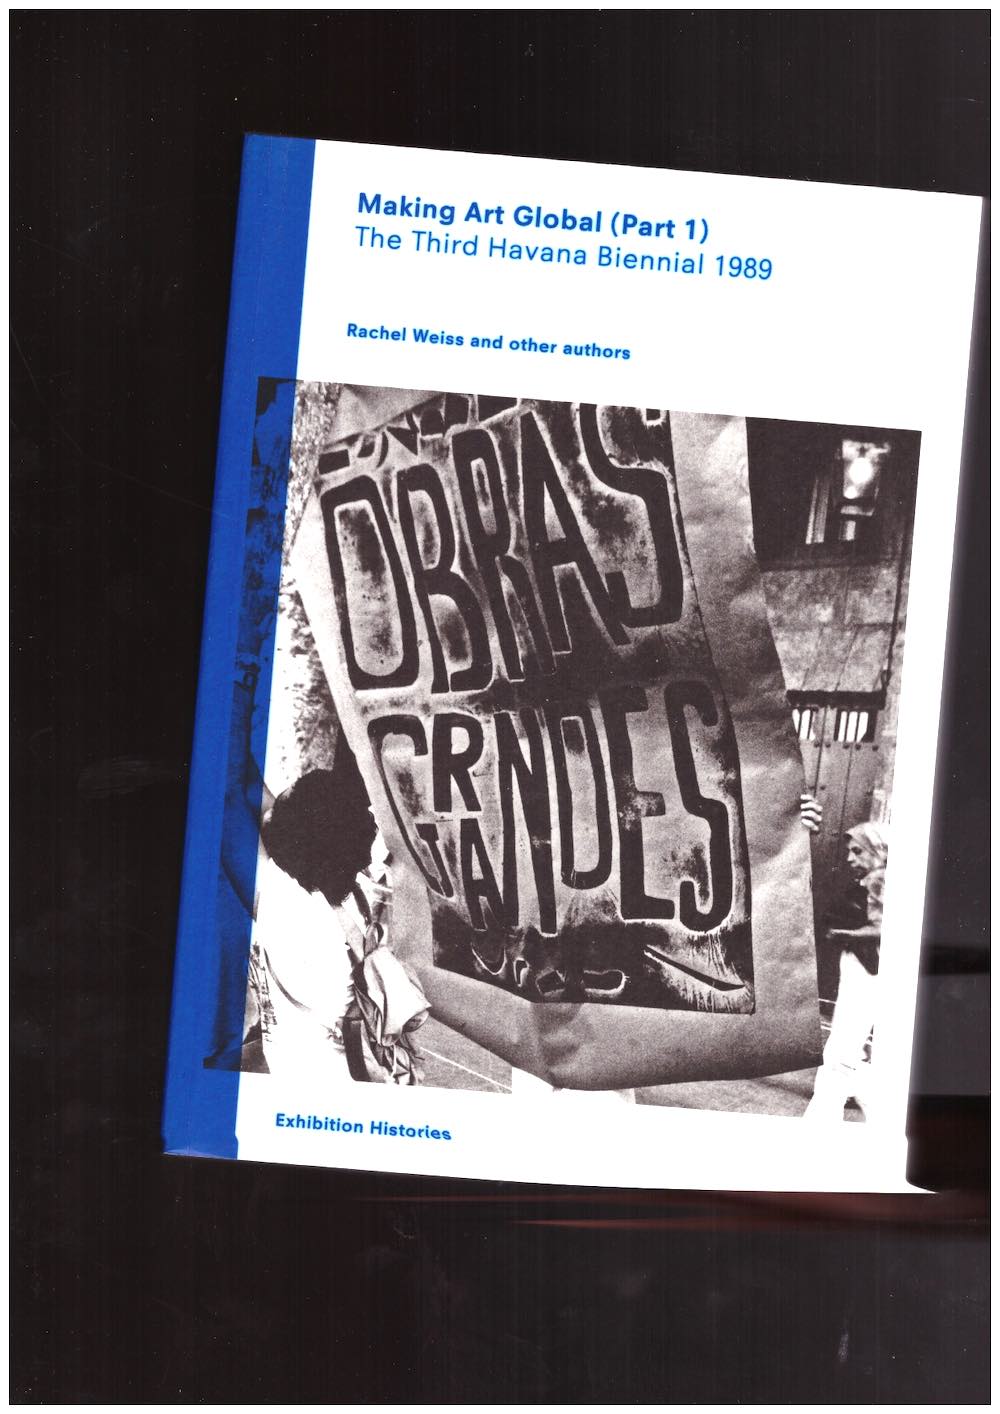 WEISS, Rachel et al. - Exhibition Histories: Making Art Global (Part 1). The Third Havana Biennial 1989